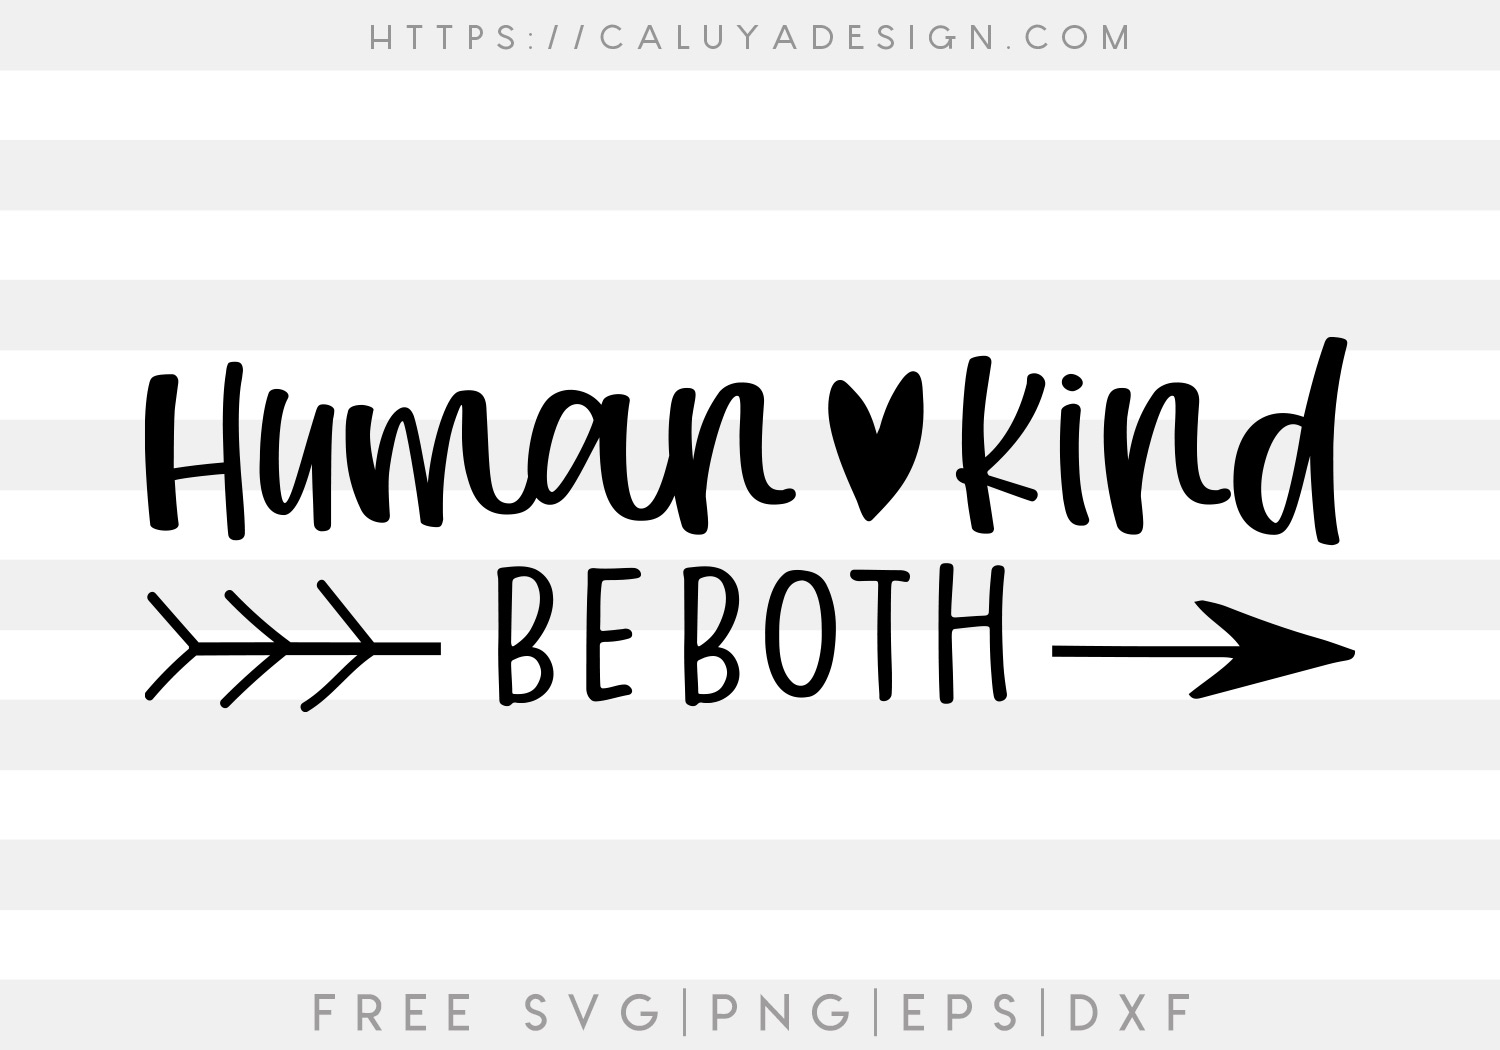 Human Kind Be Both SVG, PNG, EPS & DXF